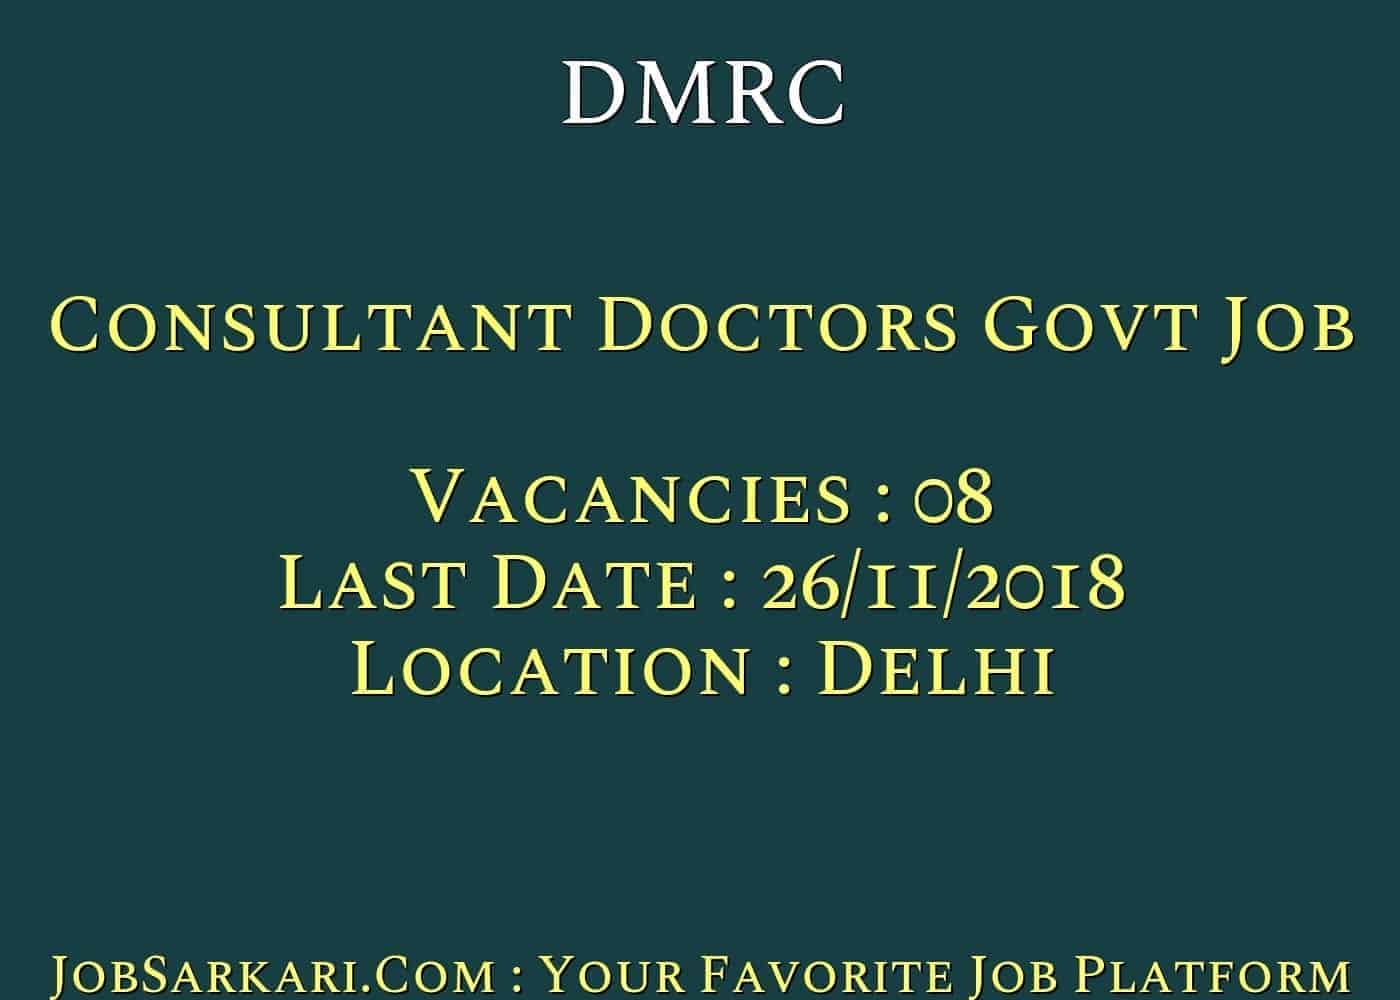 DMRC Recruitment 2018 For Consultant Doctors Govt Job